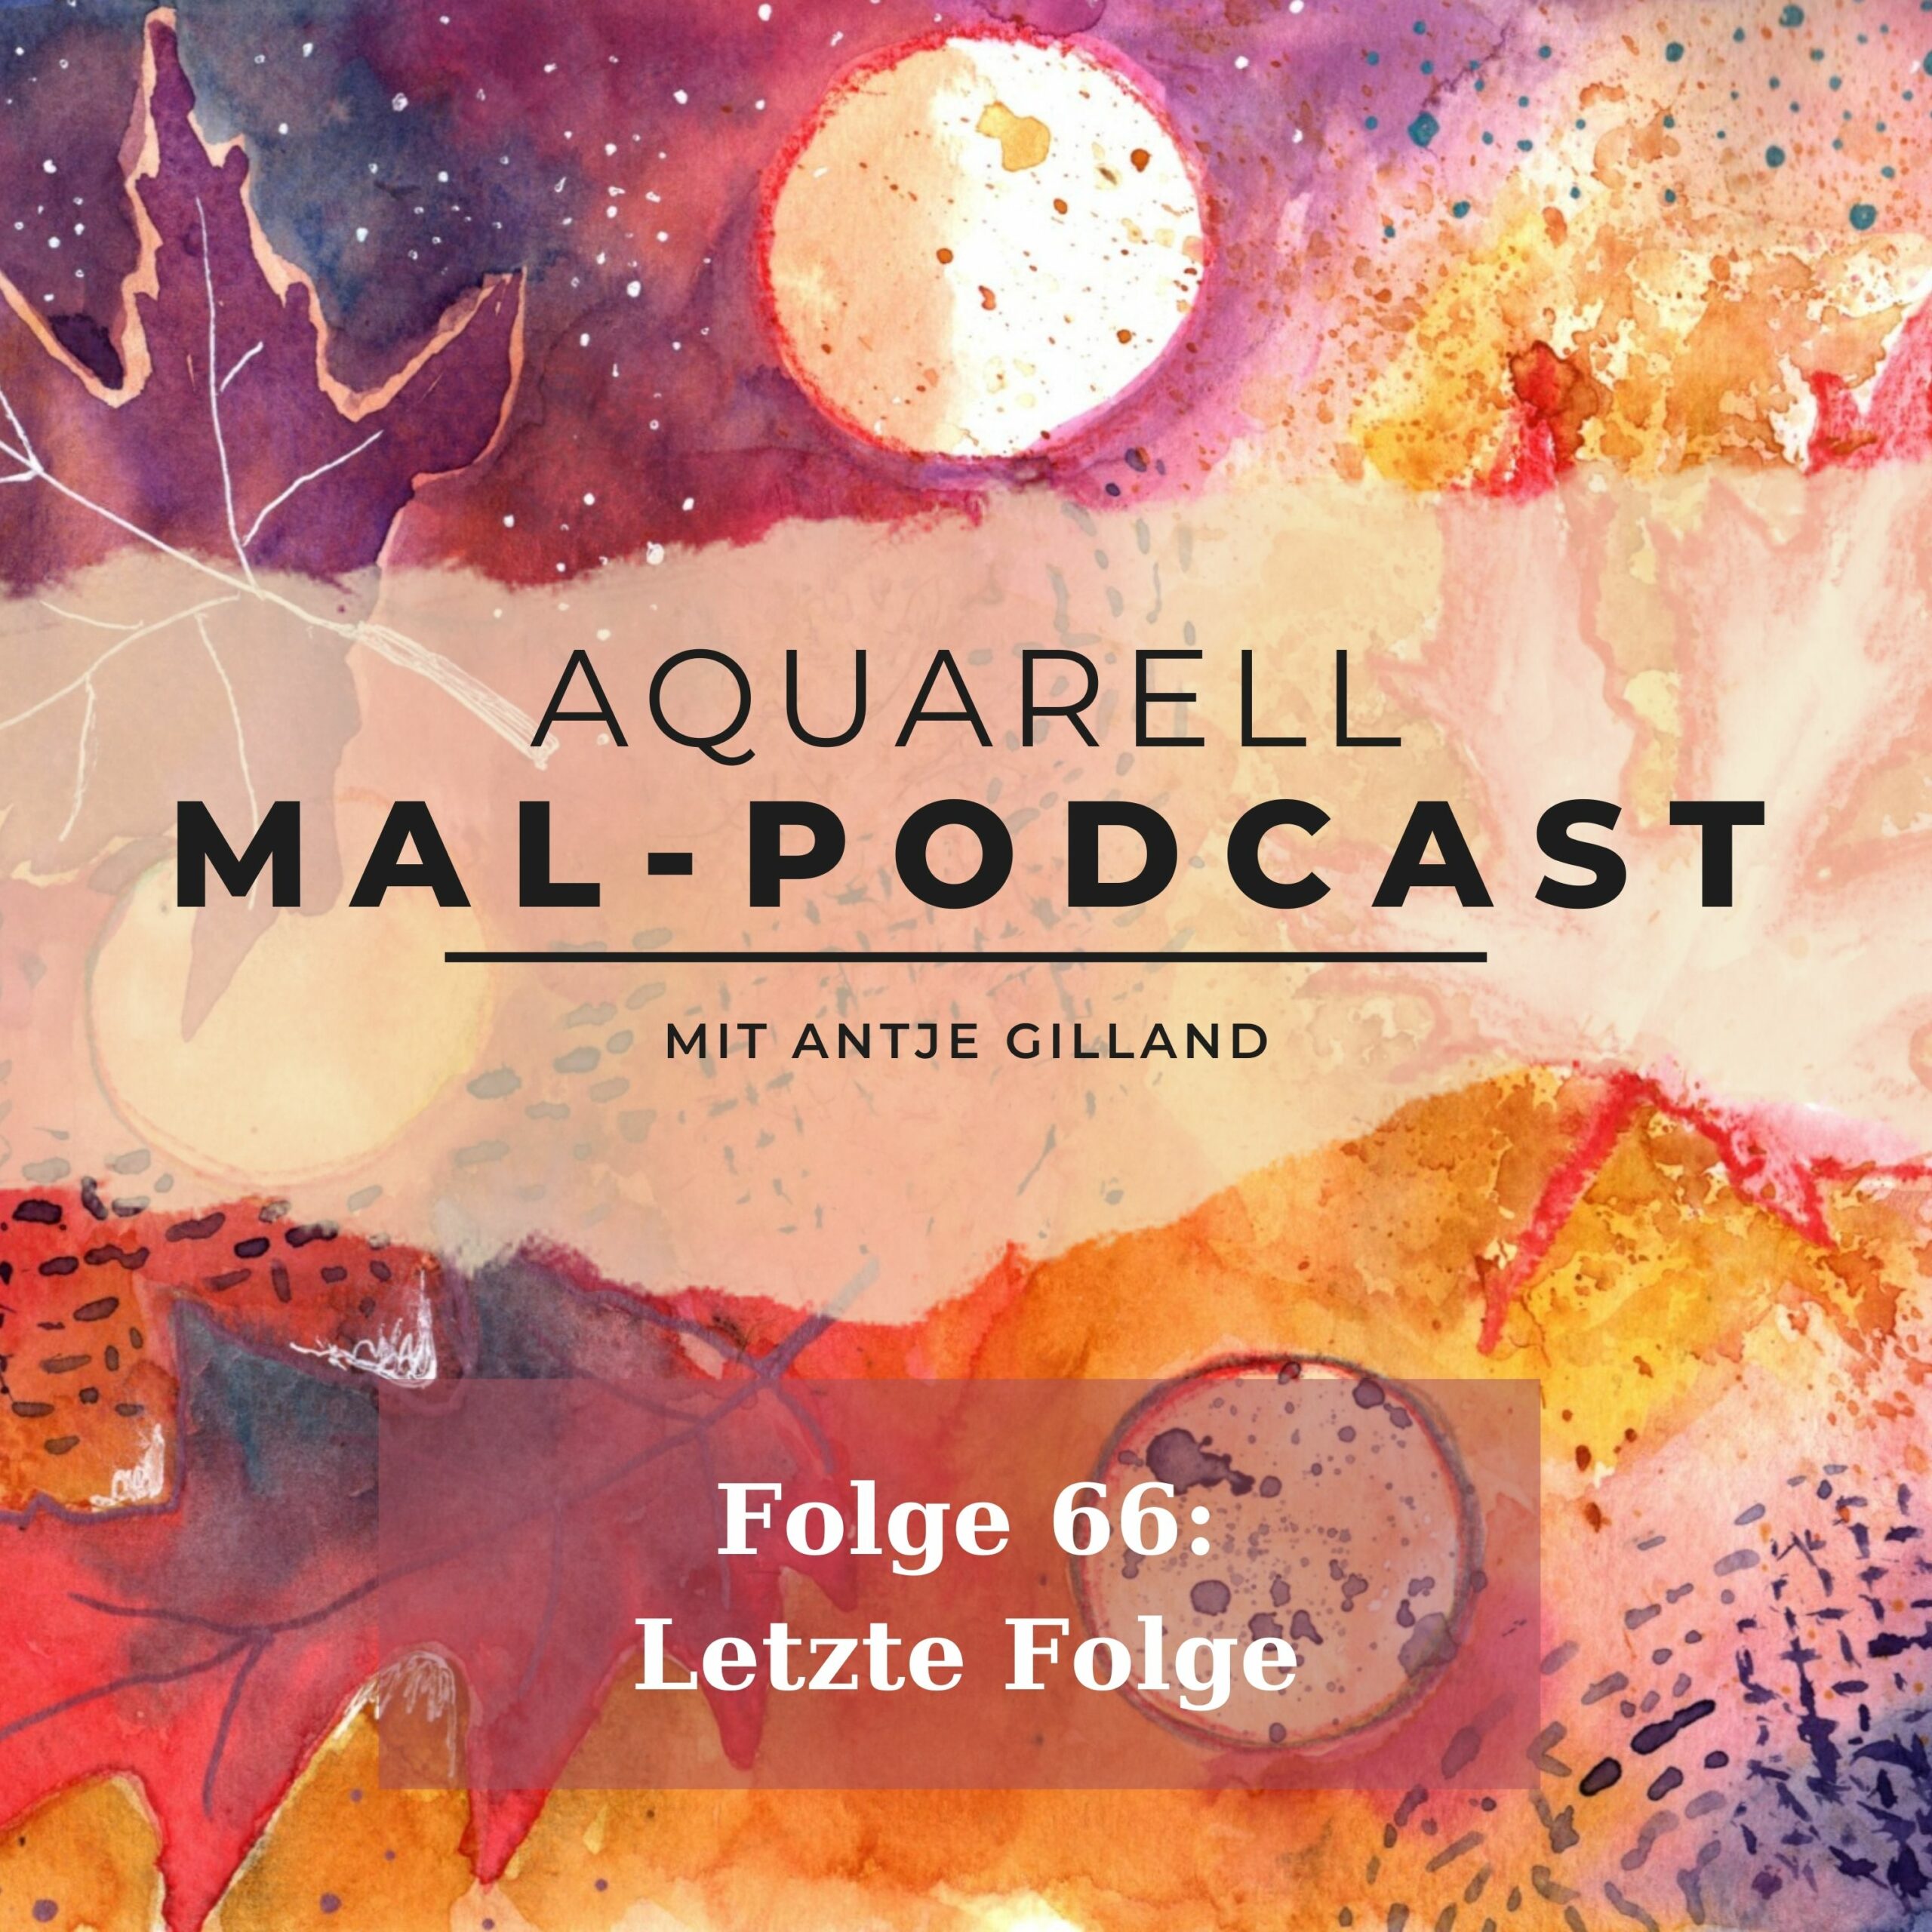 Folge 66: Letzte Folge vom Aquarell Mal-Podcast